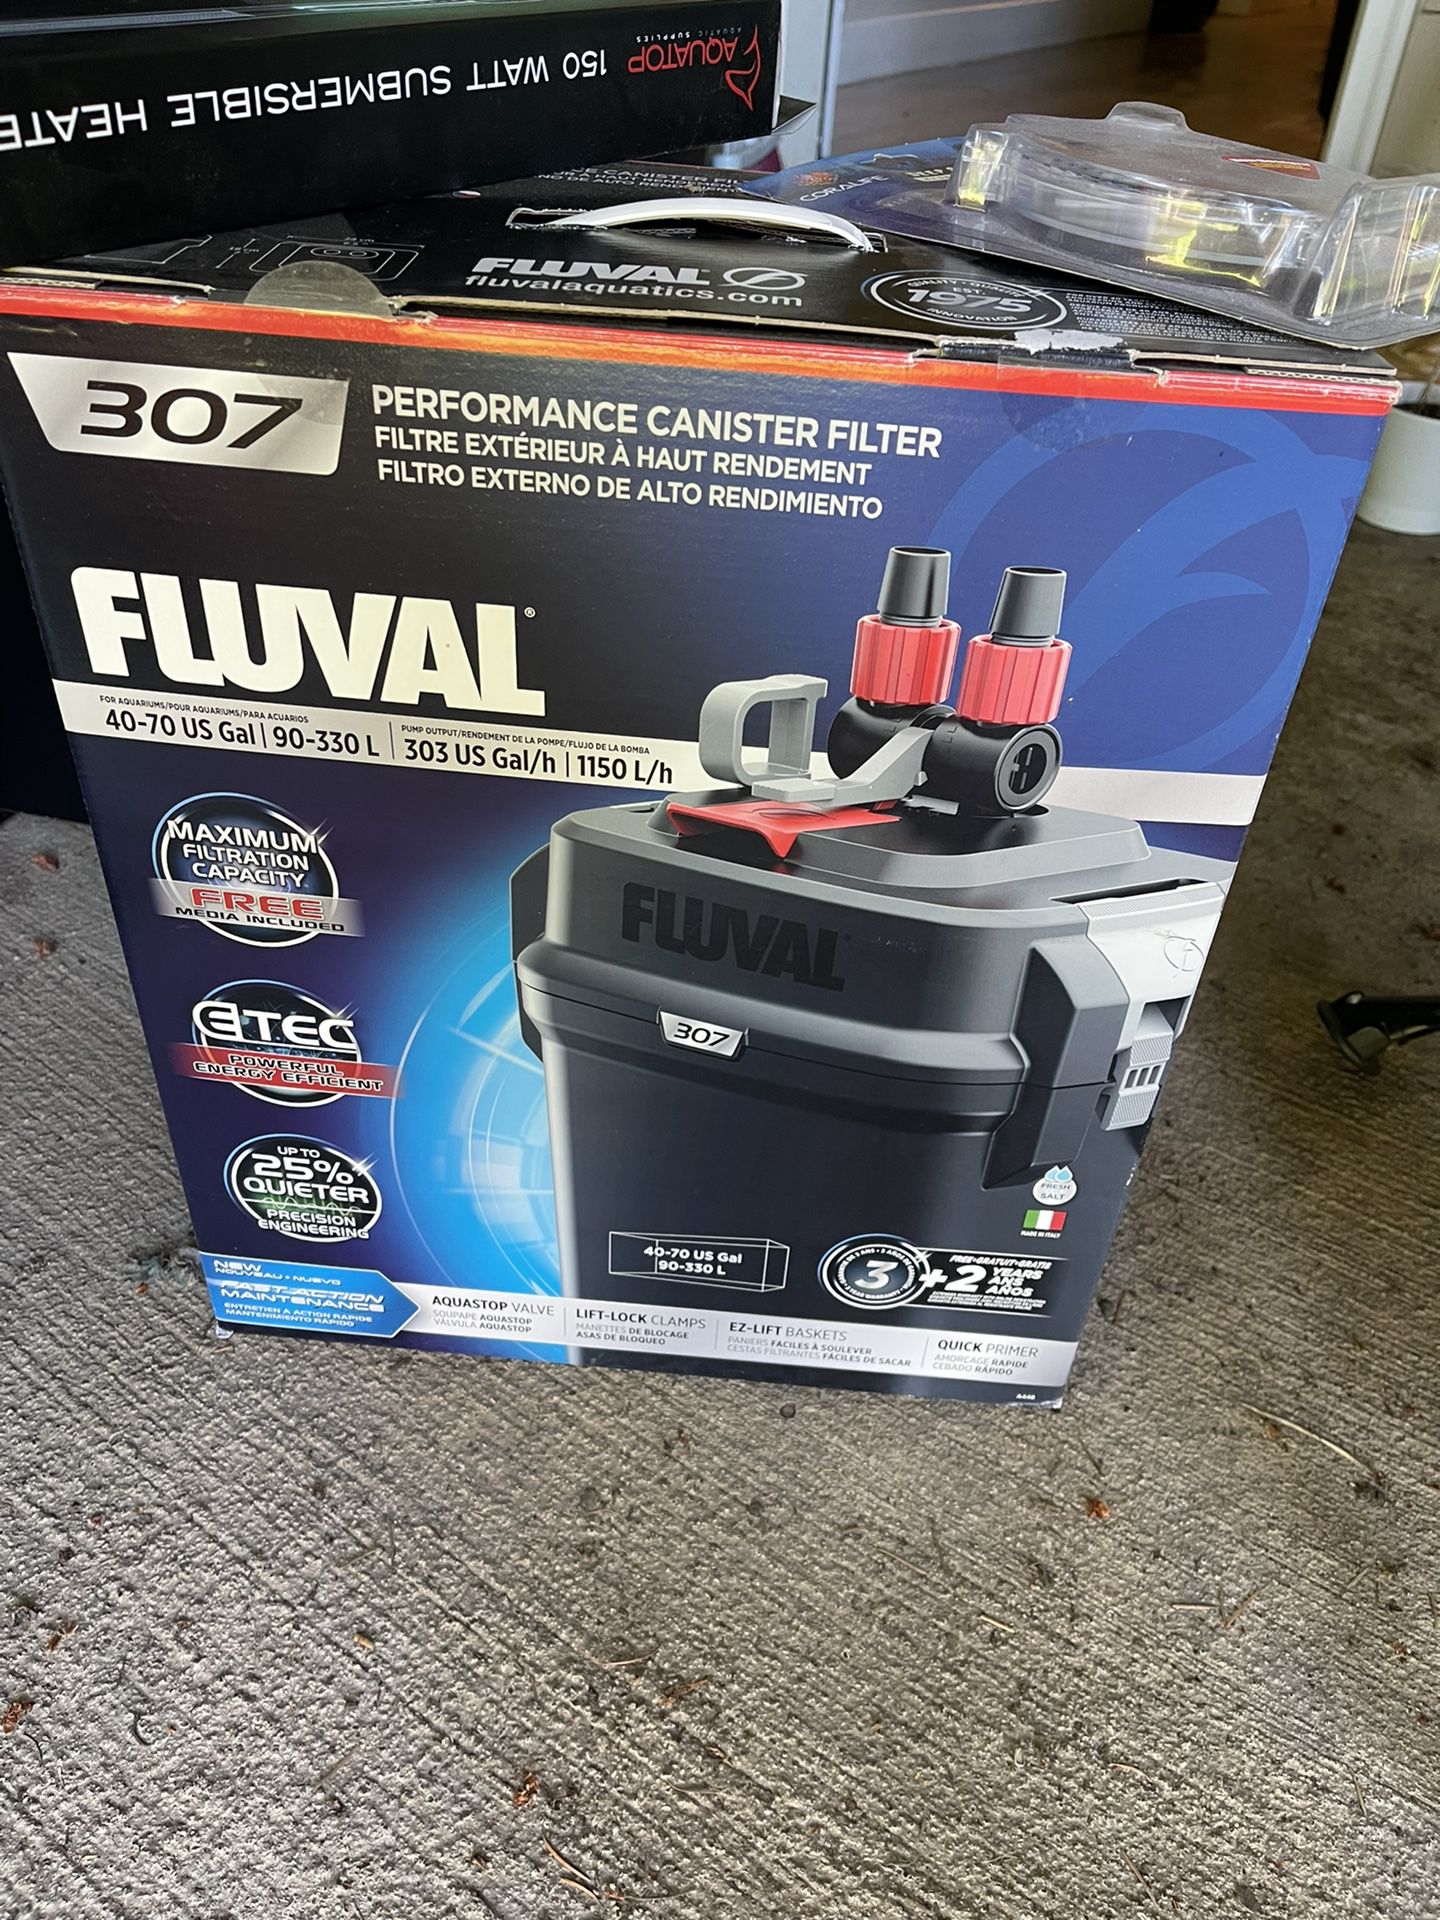 Fluval® 307 Performance Canister Filter